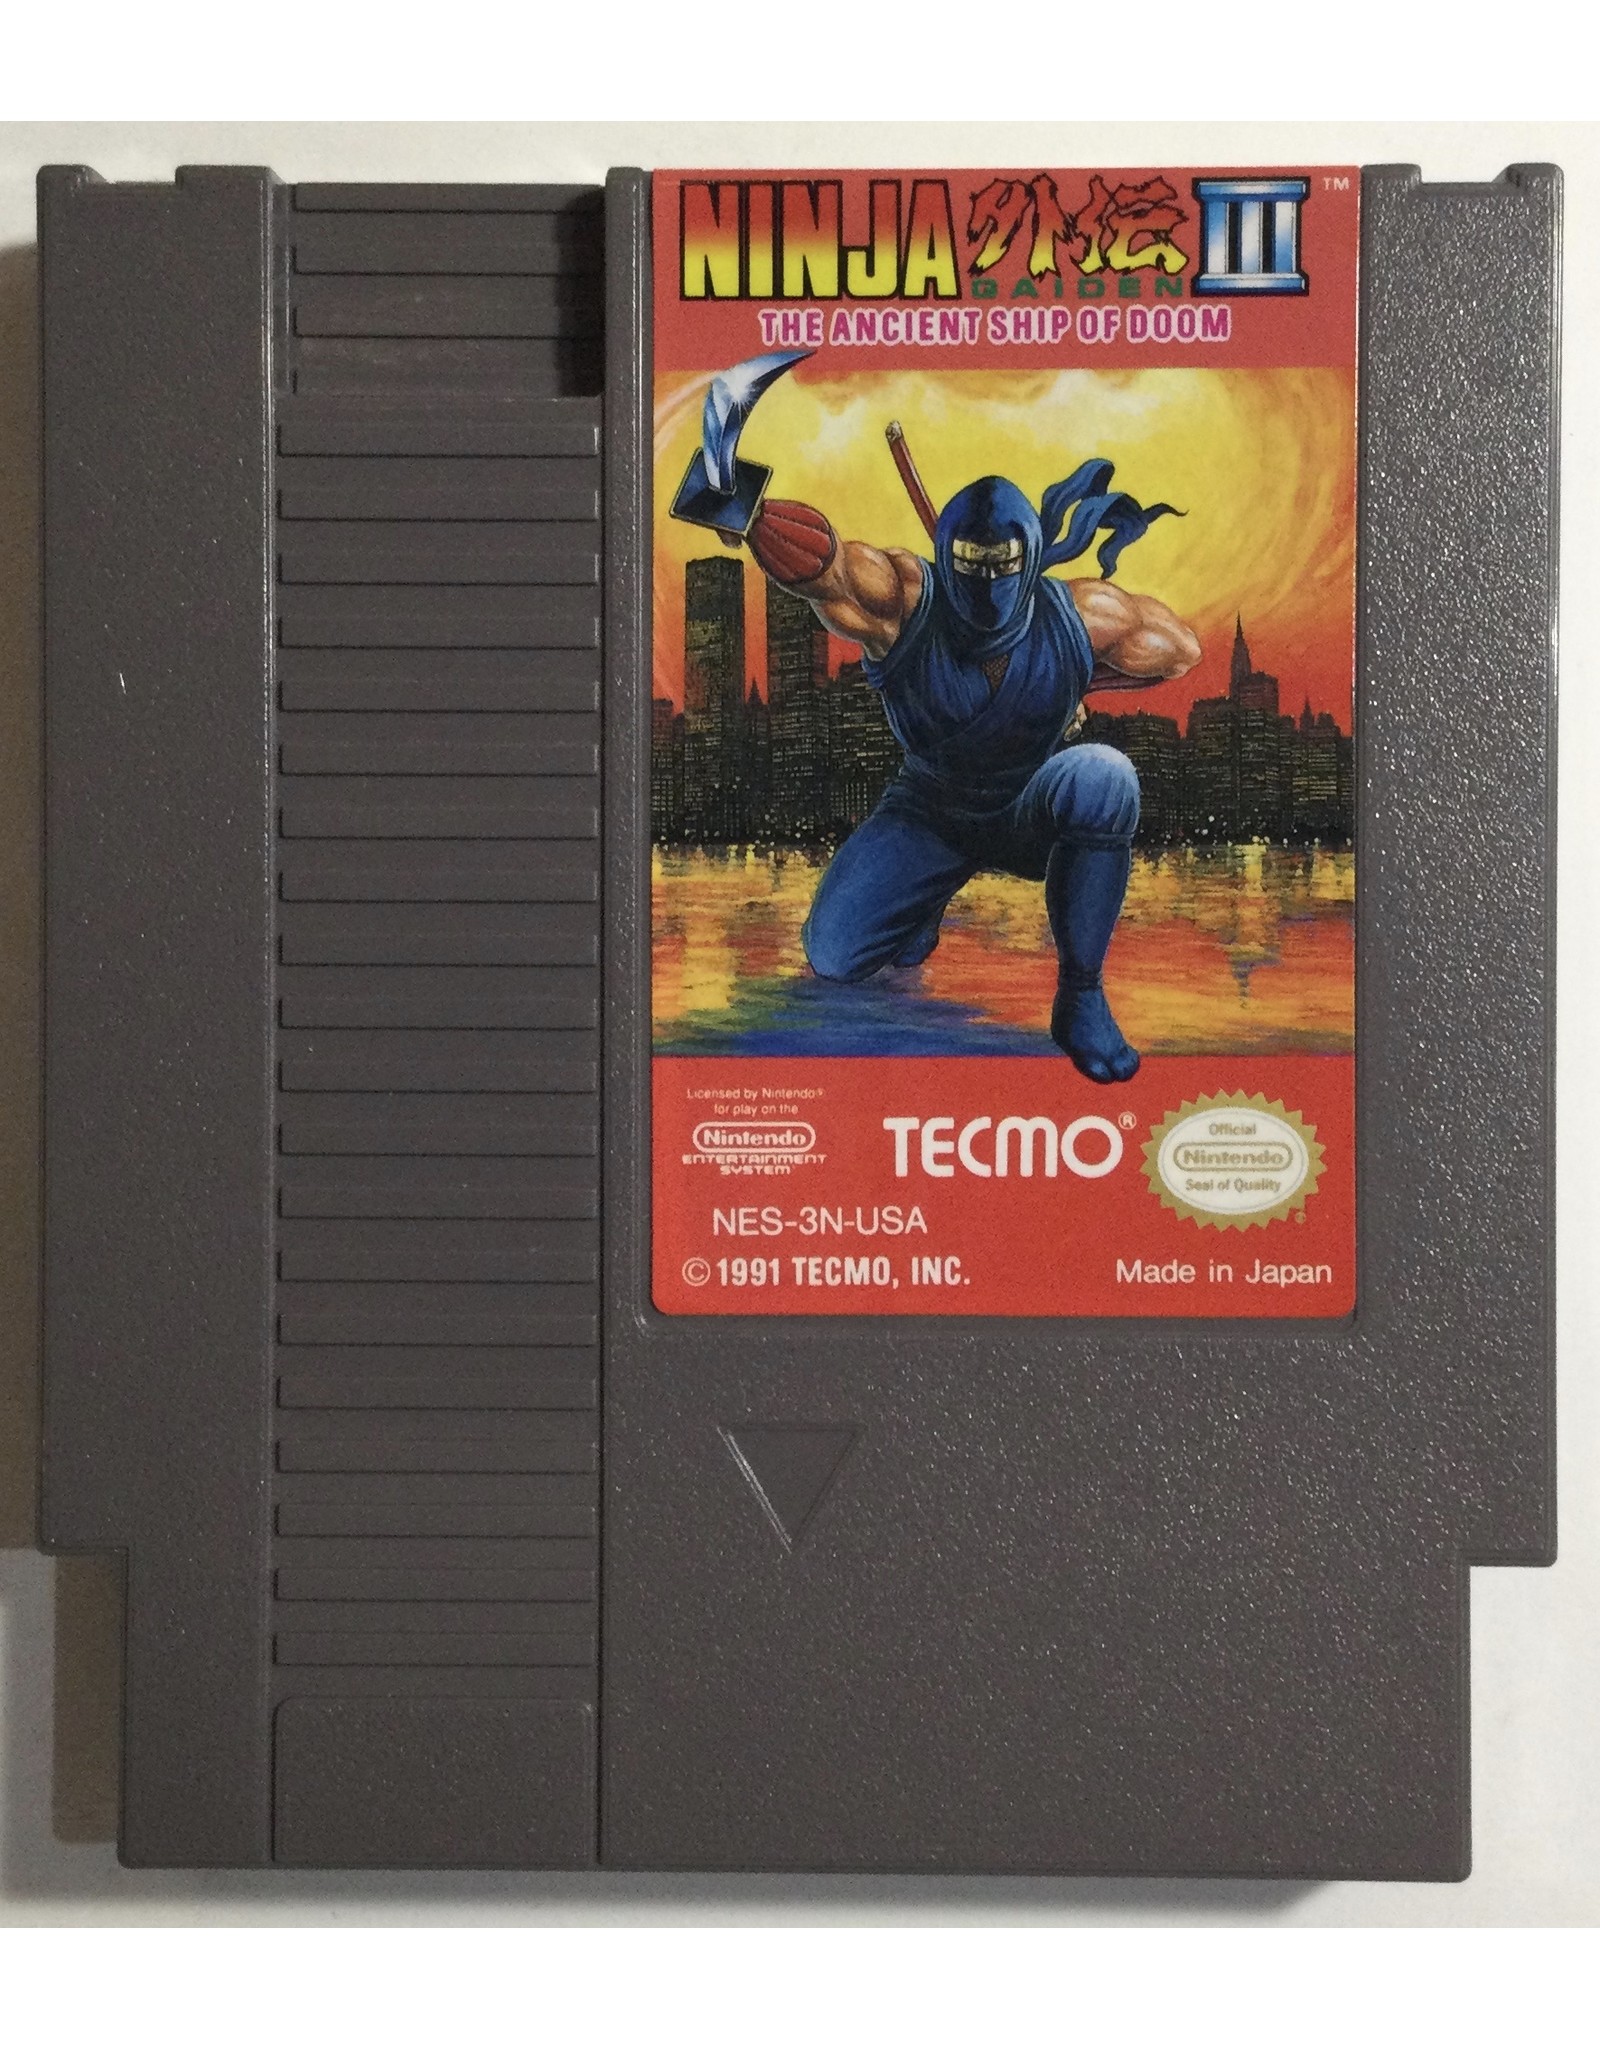 TECMO Ninja III The Ancient Ship of Doom for Nintendo Entertainment System (NES)